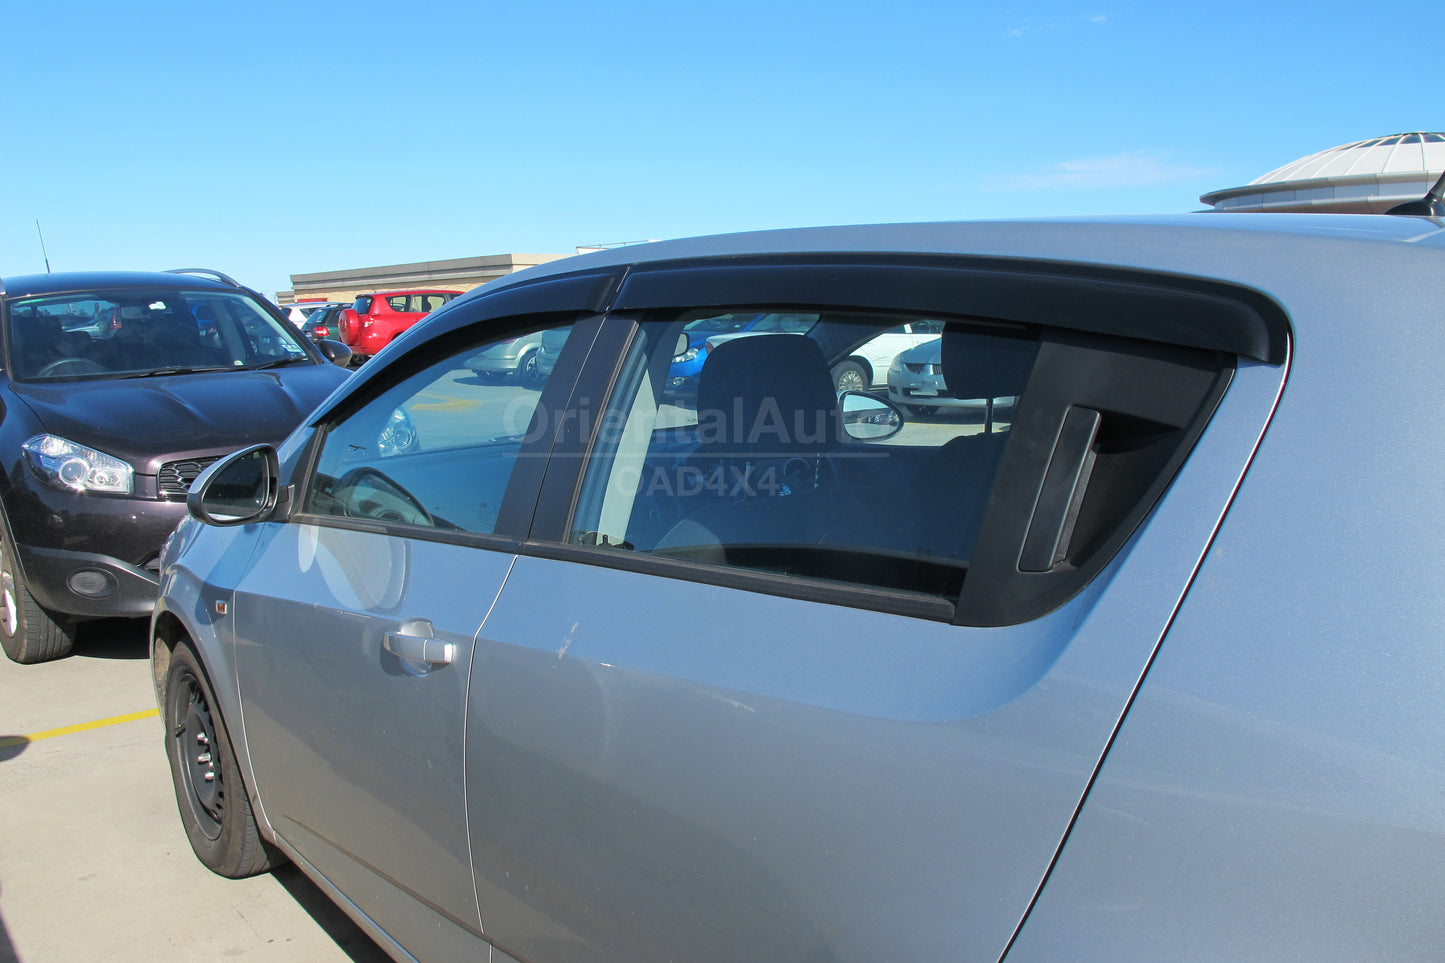 Premium Weathershields Weather Shields Window Visor For Holden Barina Hatch 5D TM Series 2011-2019